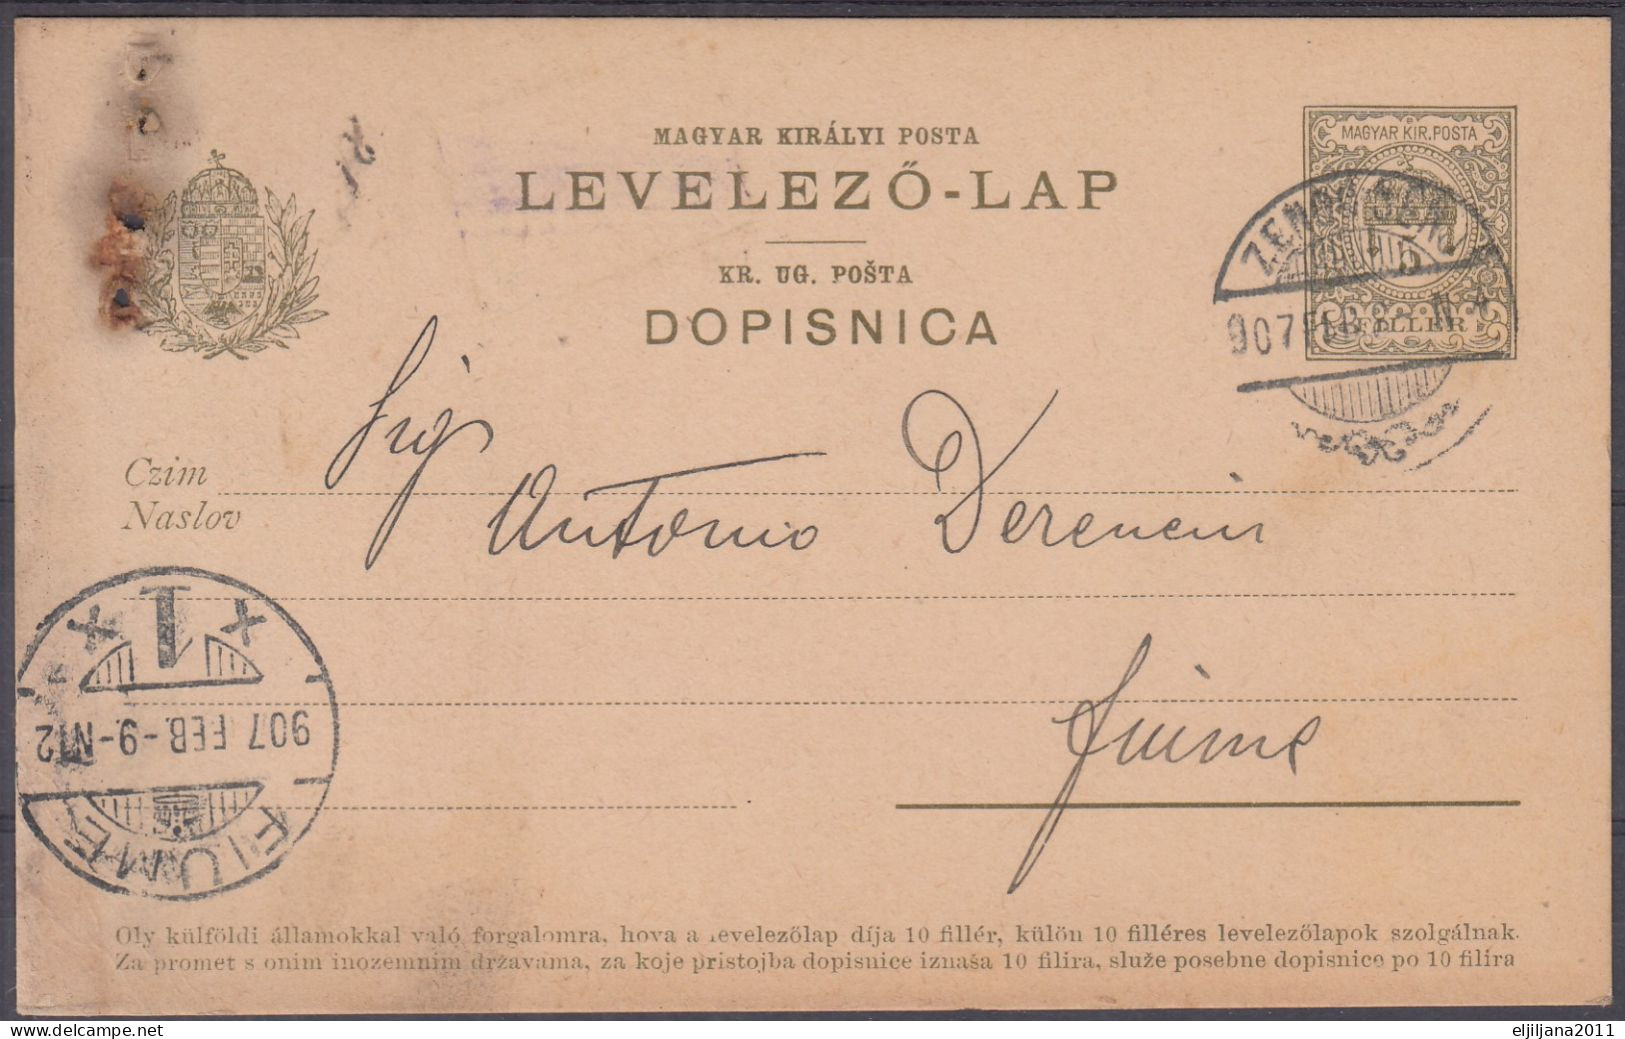 ⁕ Hungary - Ungarn 1907 ⁕ ZENGG / SENJ - FIUME, Levelező-lap, Magyar Kir. Posta 5 Filler ⁕ Postal Stationery #3 - Entiers Postaux